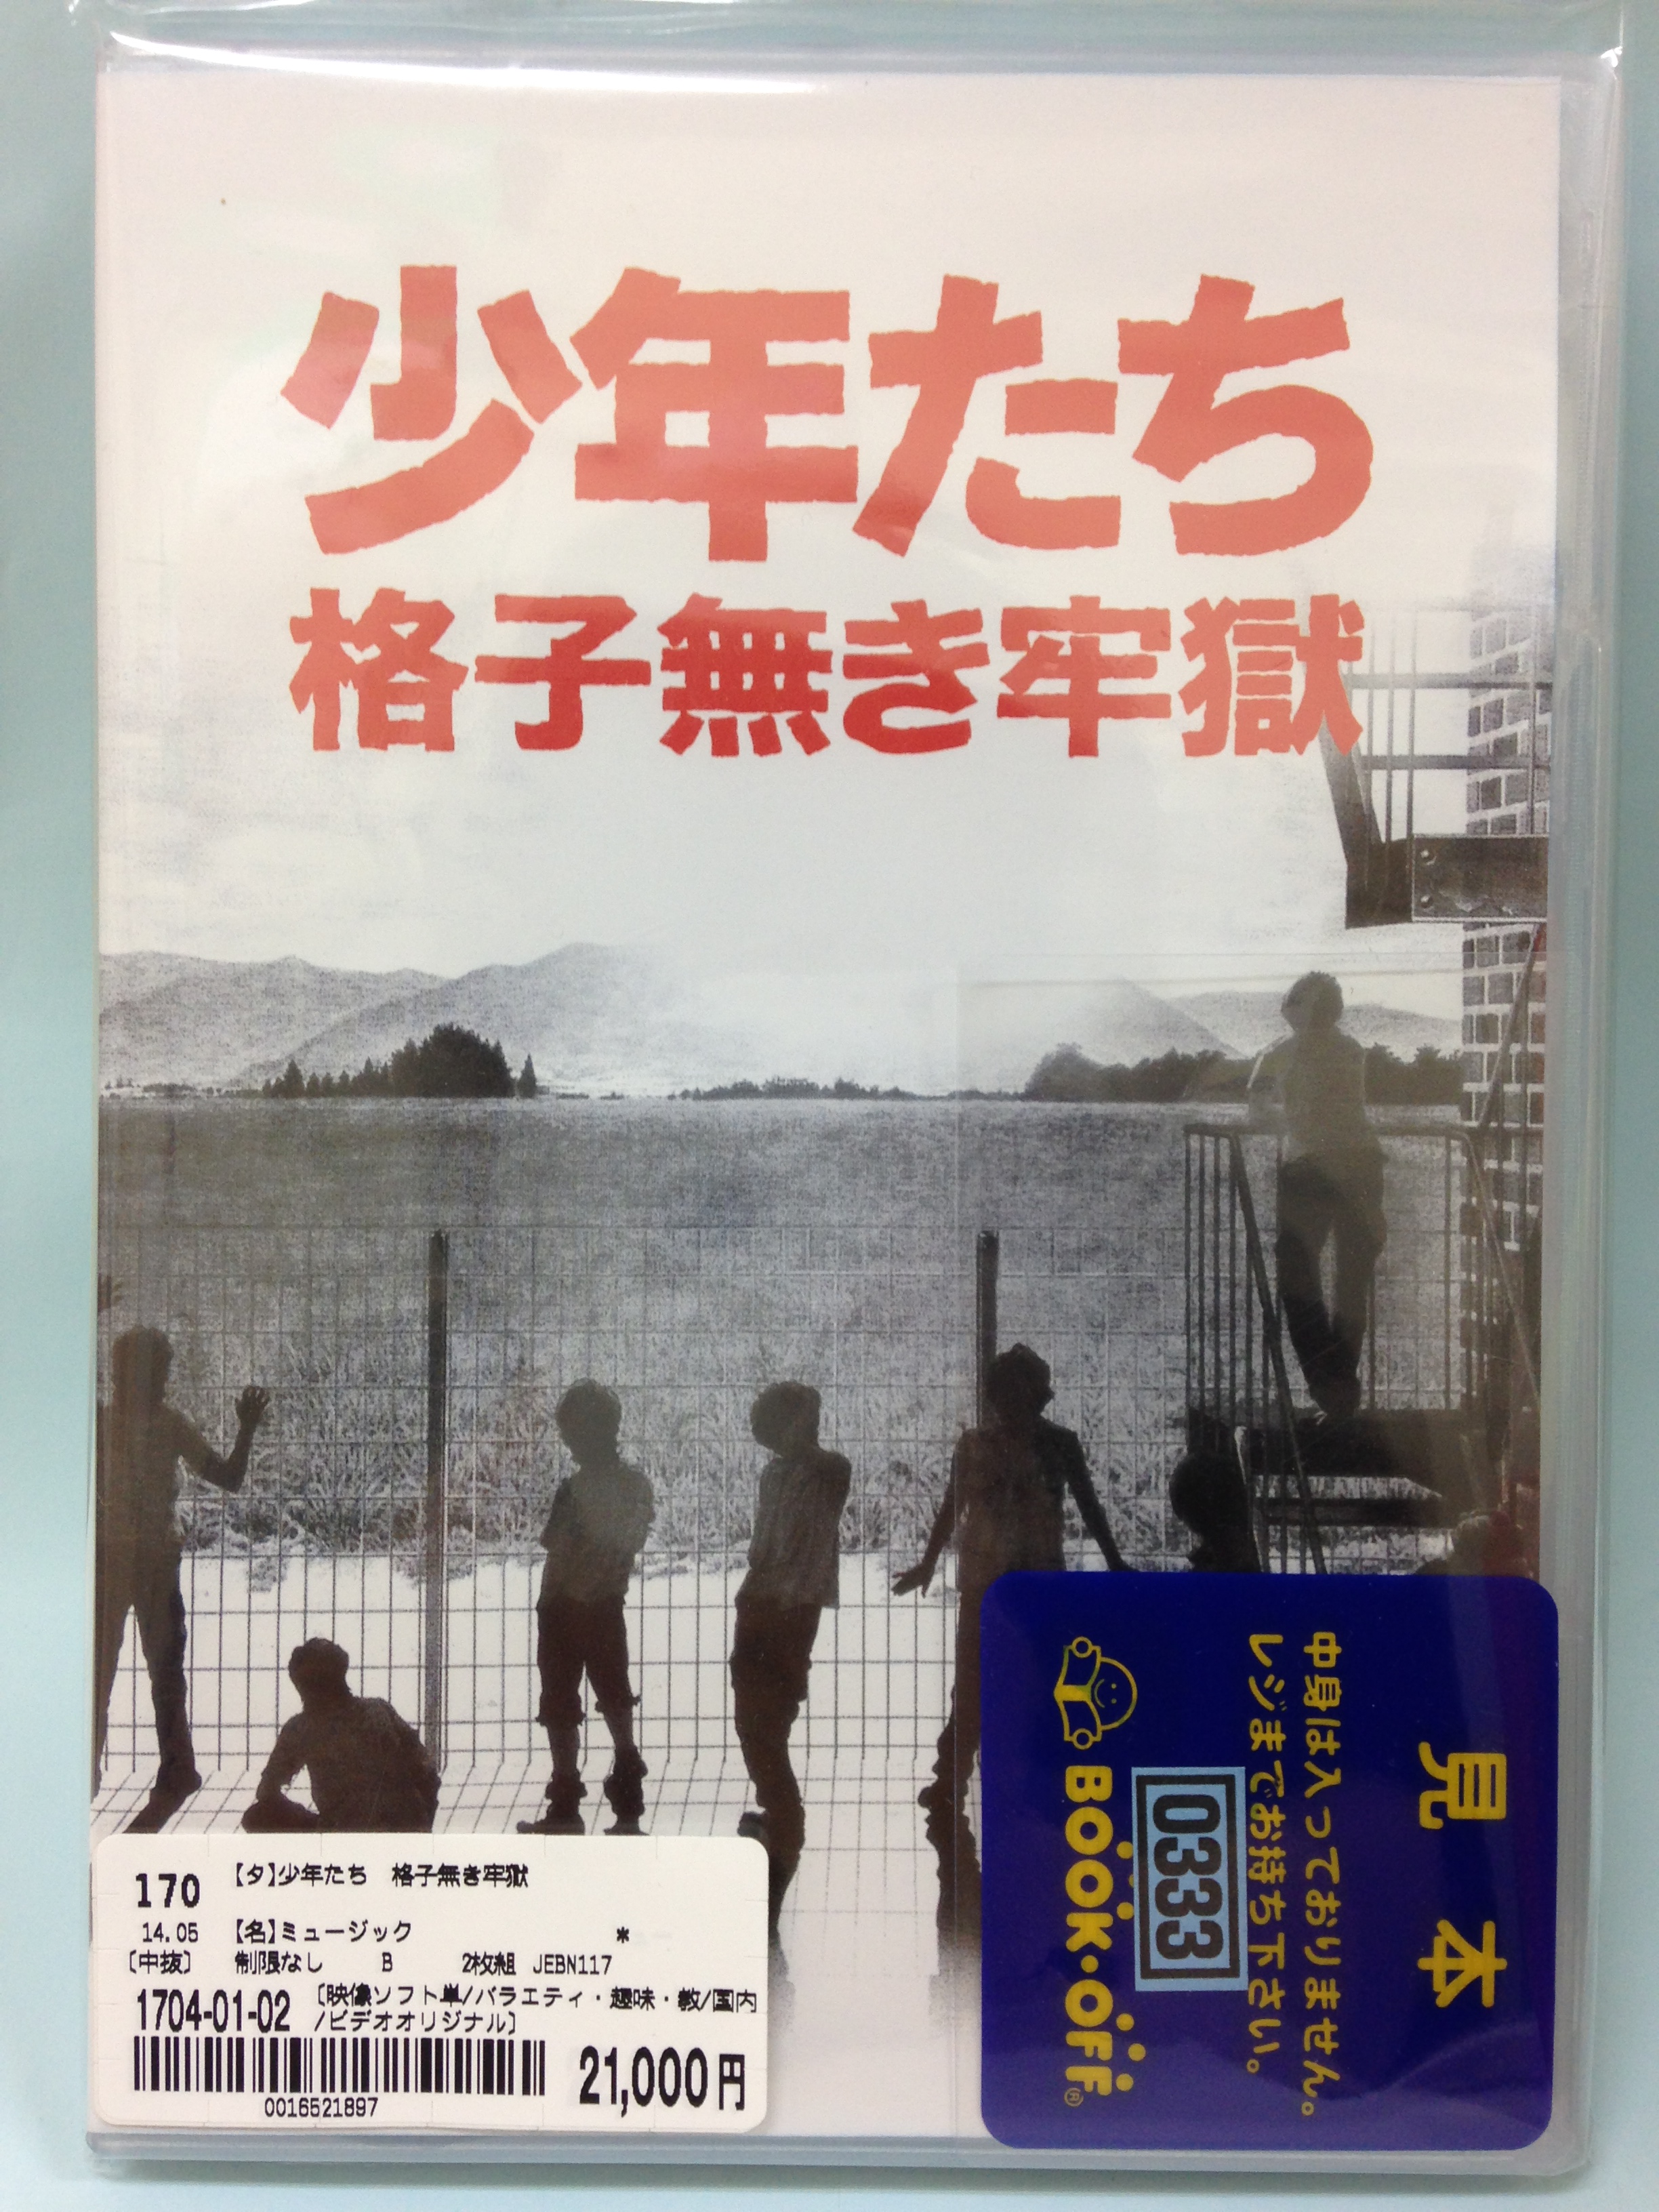 DVD/ブルーレイ 格安販売の 格子無き牢獄〈2枚組〉と少年たちJail the 少年たち セット in Sky Daininki Shinpin